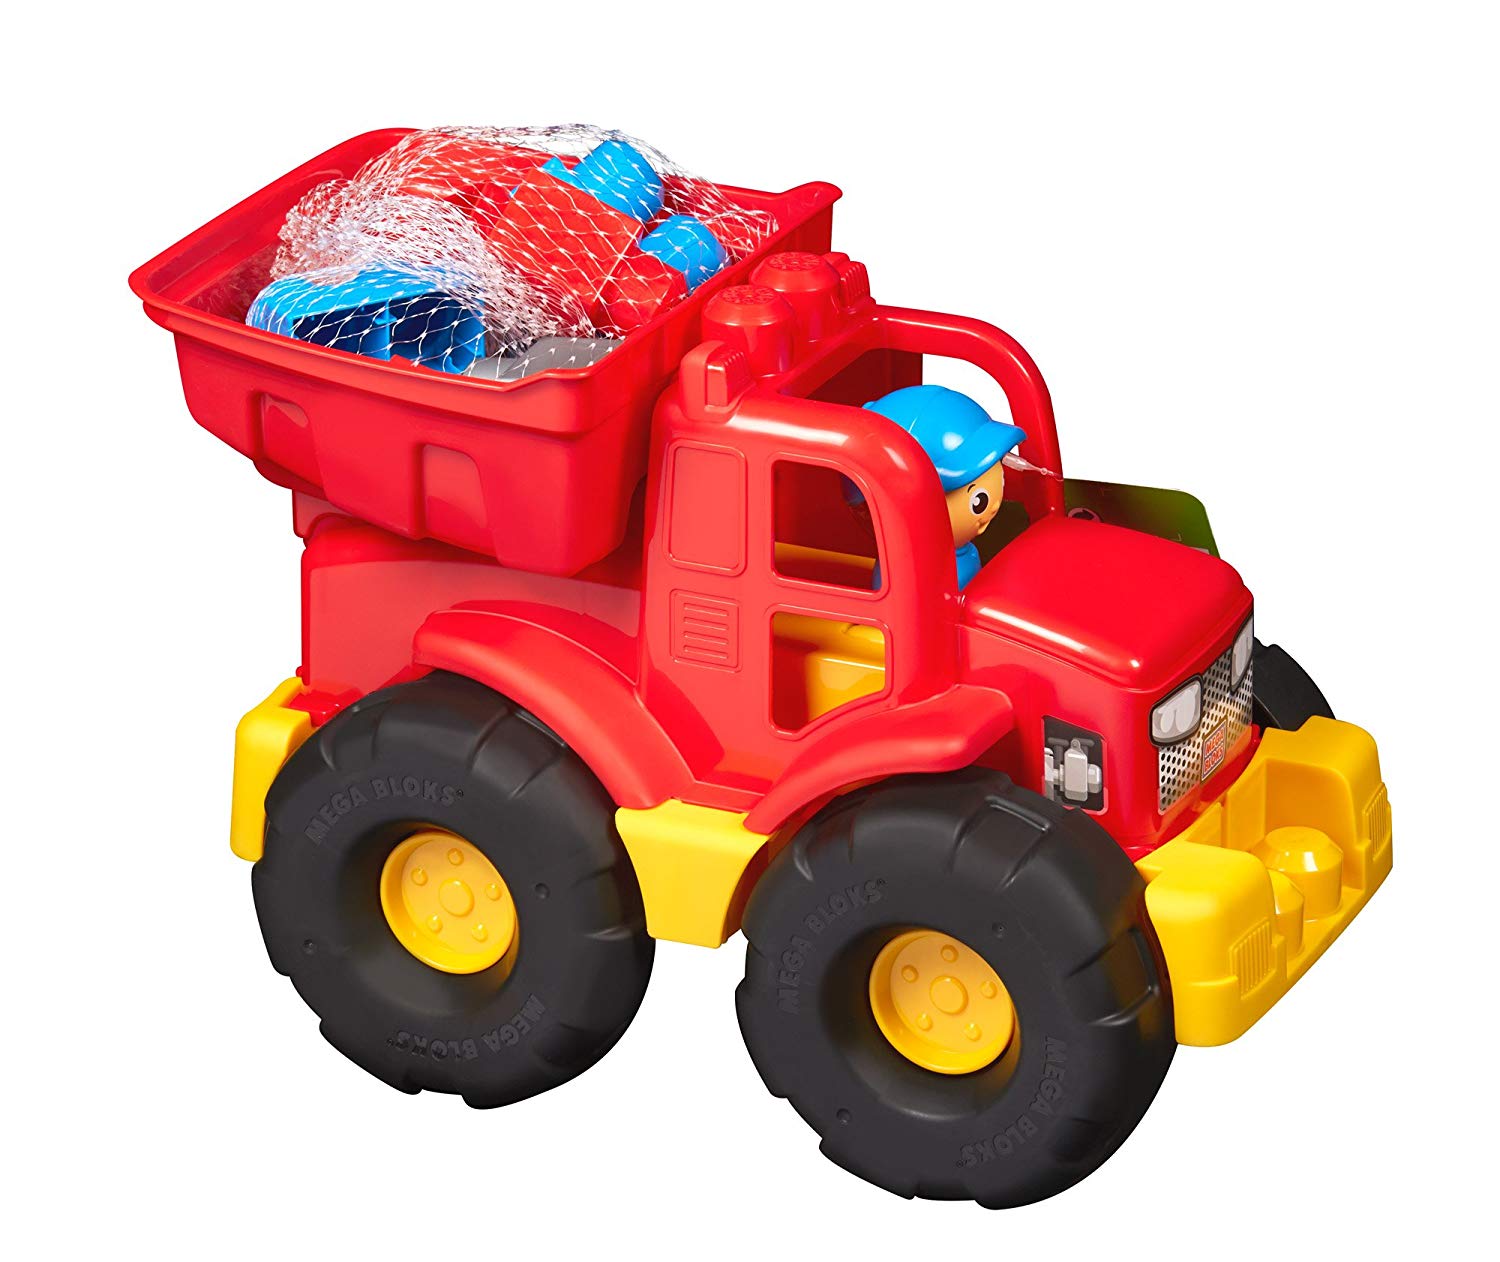 Mattel Mega Bloks Dpp73 2 In 1 Border, Building And Construction Toy